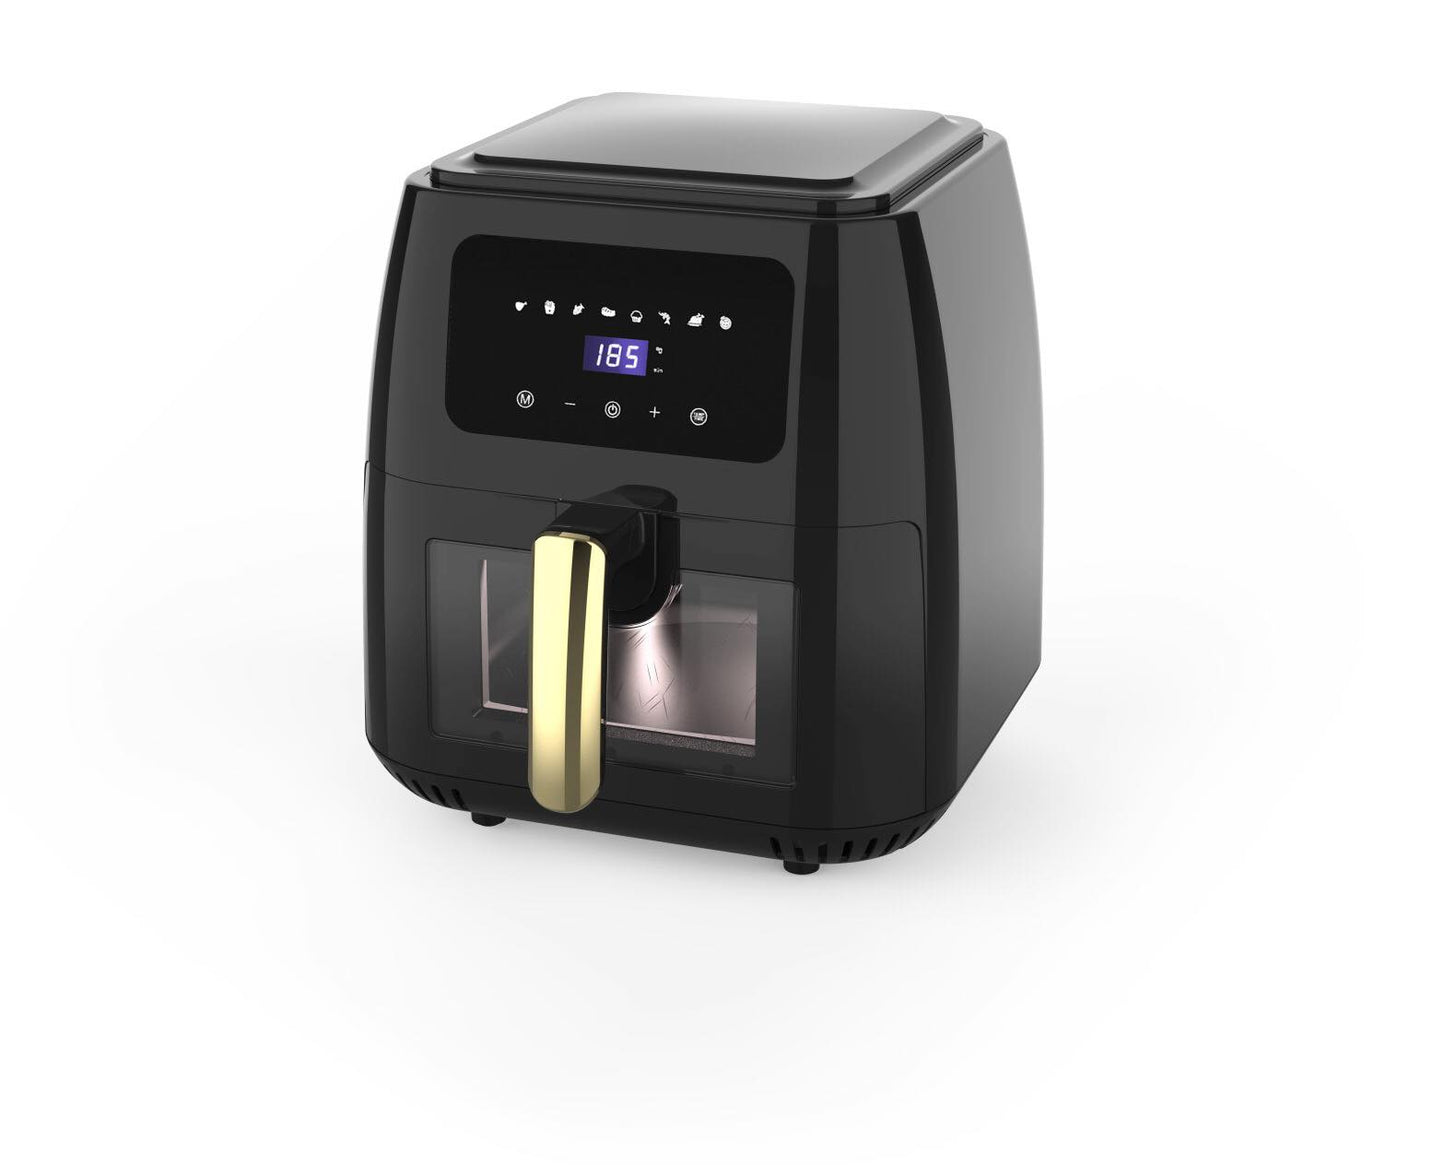 DSP Smart Digital Air Fryer 8.5 L - 1700 W